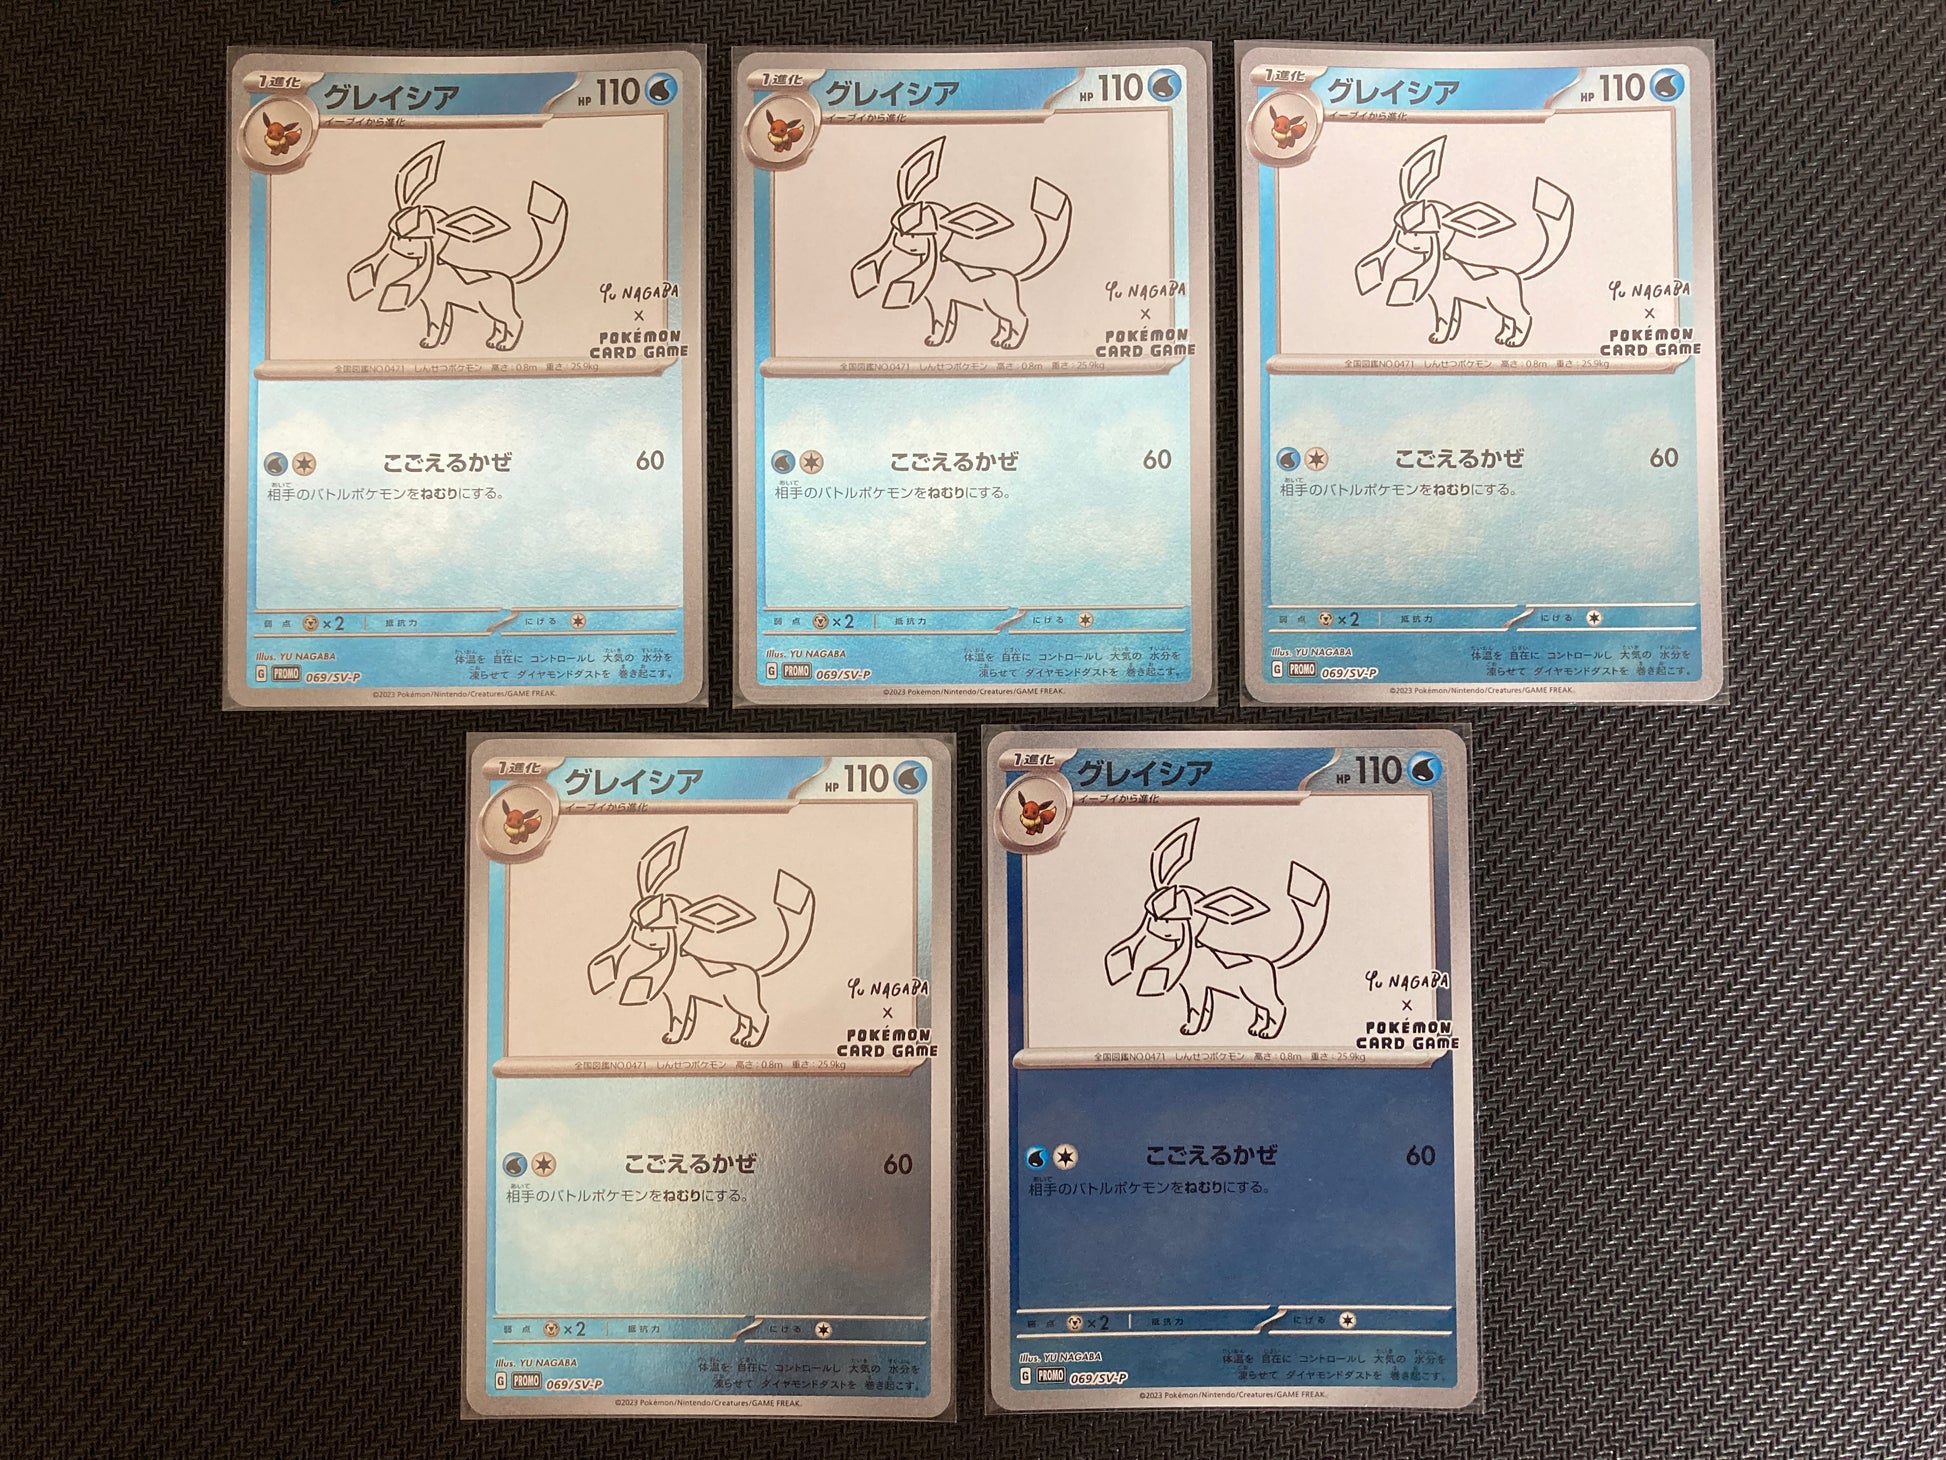 Pokemon Card Yu Nagaba Eevee's card Special Promo card complete set 